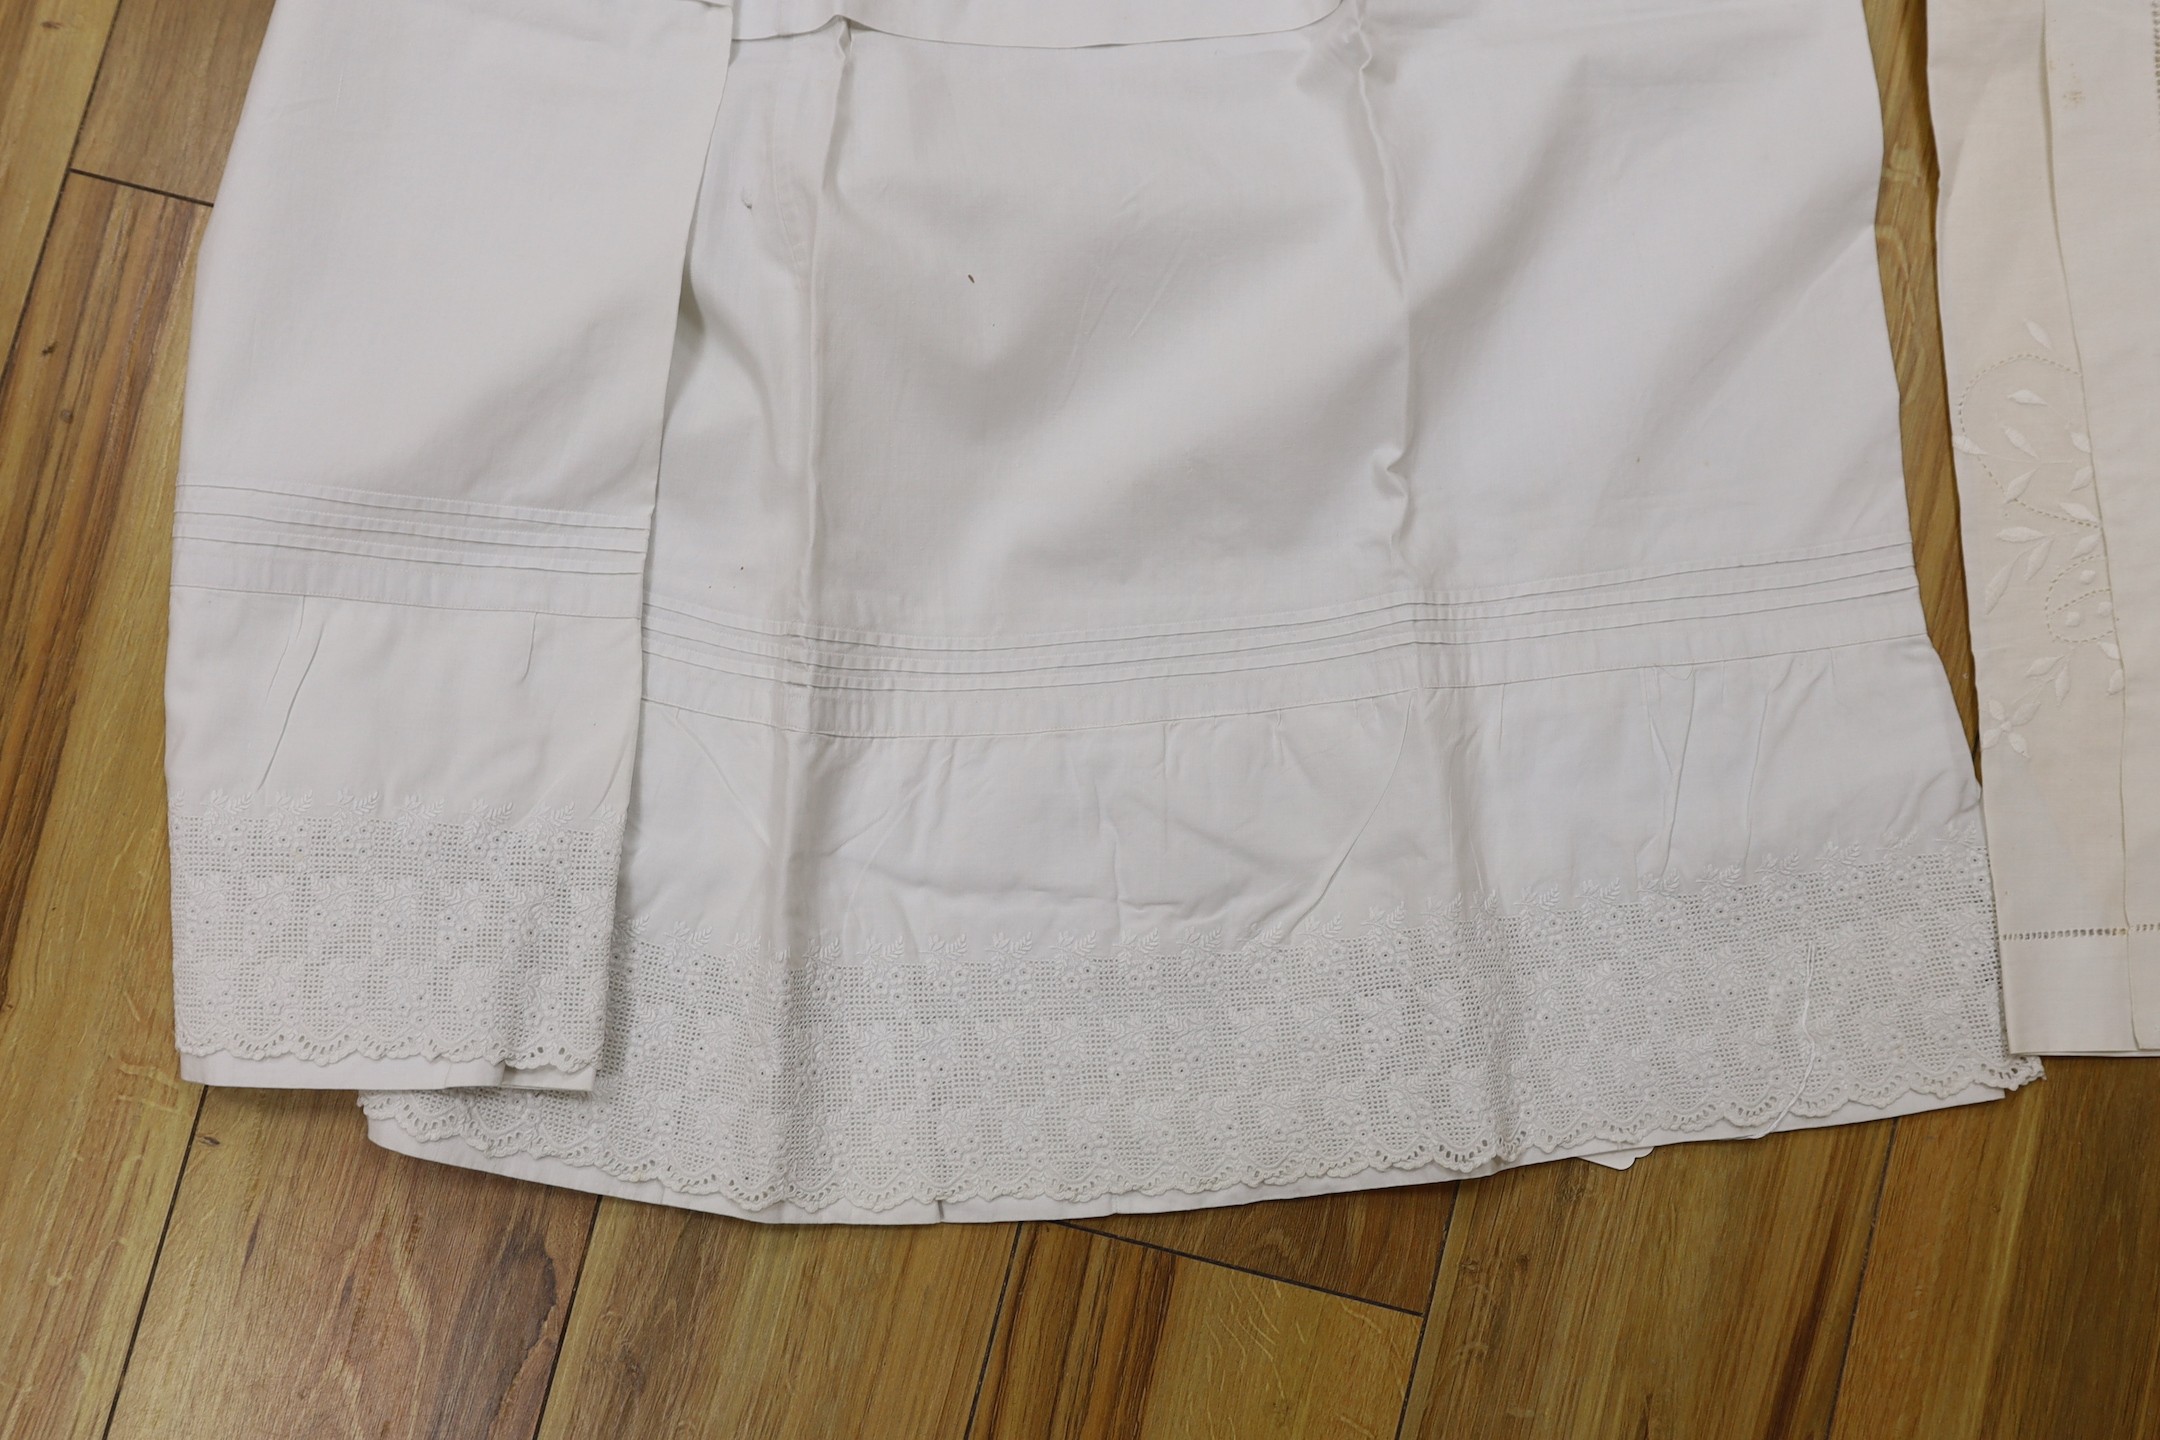 A selection of Edwardian linen undergarments